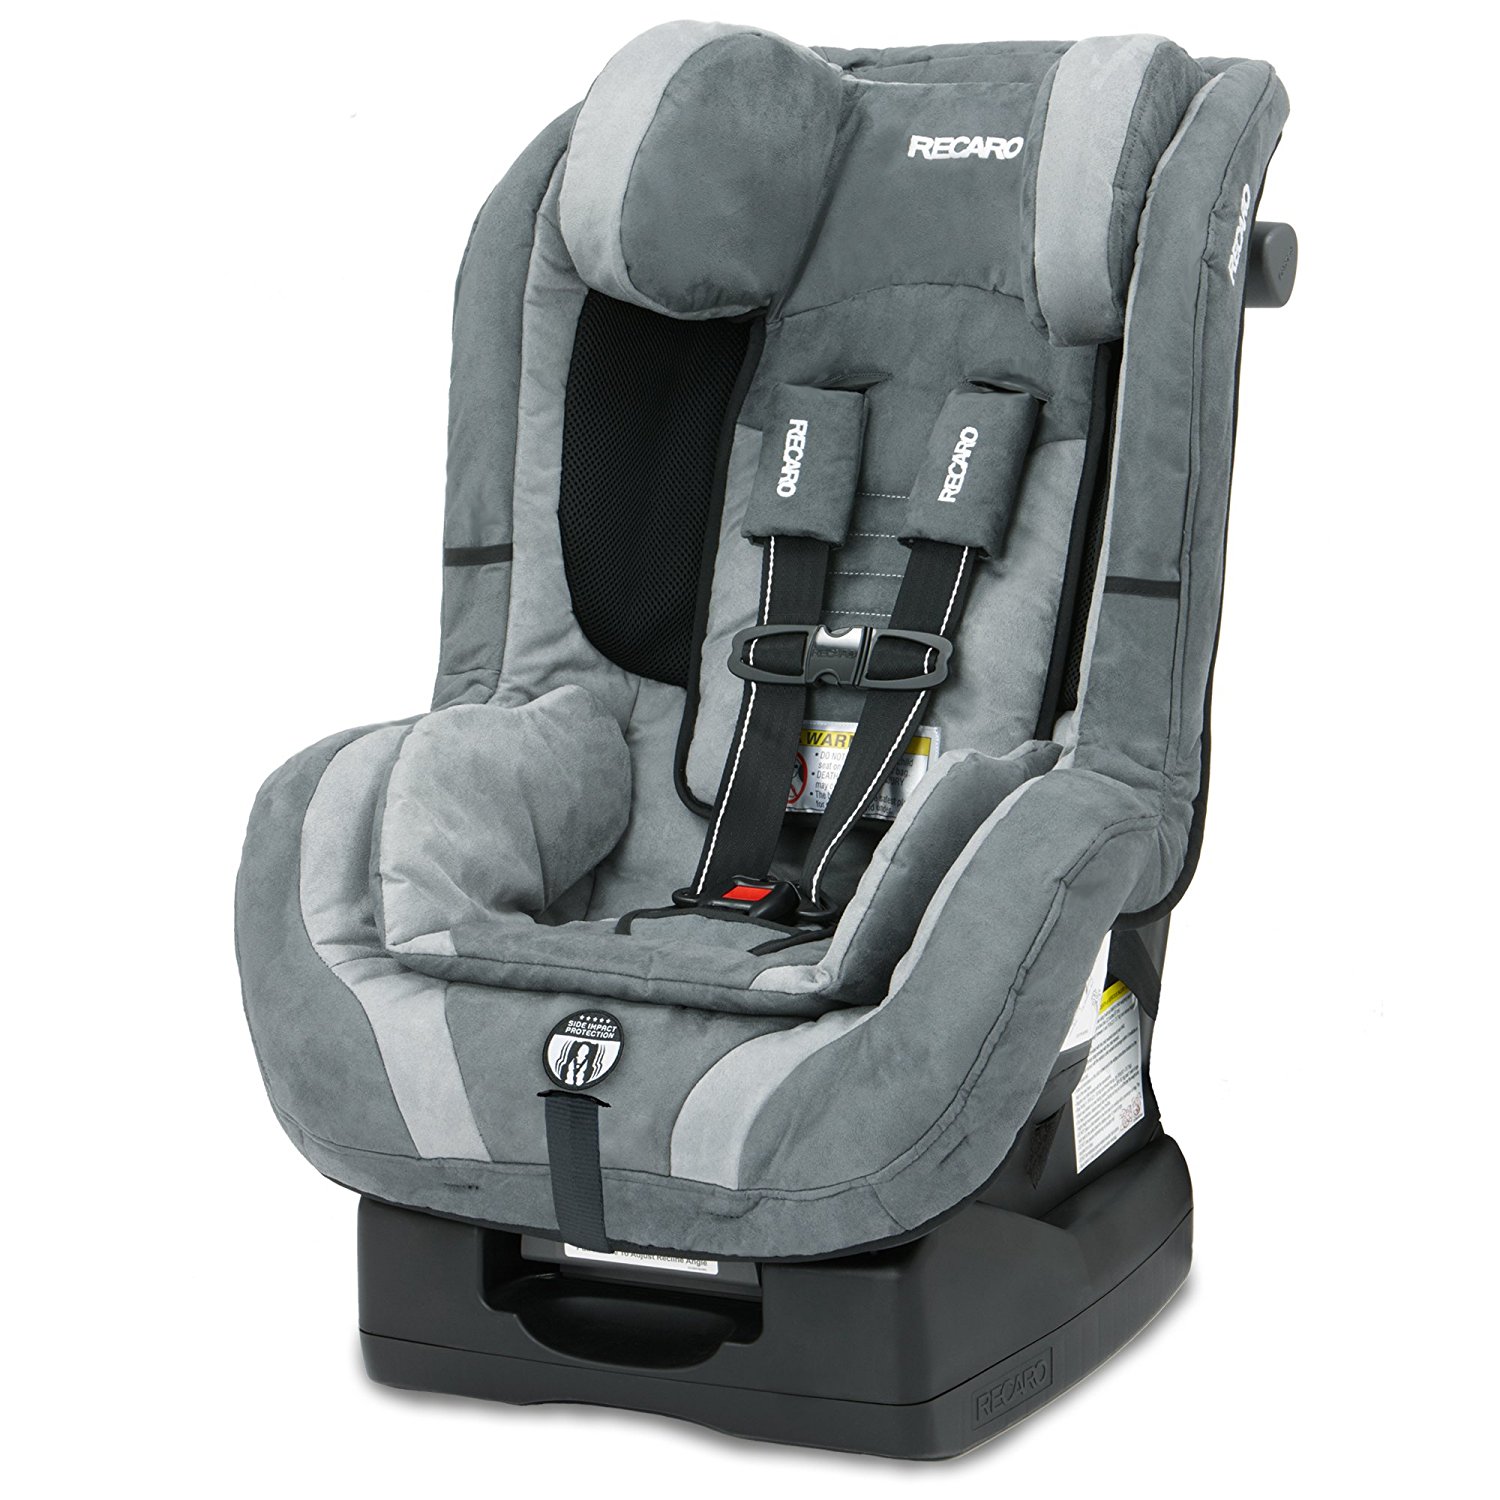 Amazon.com : RECARO ProRIDE Convertible Car Seat, Misty : Baby